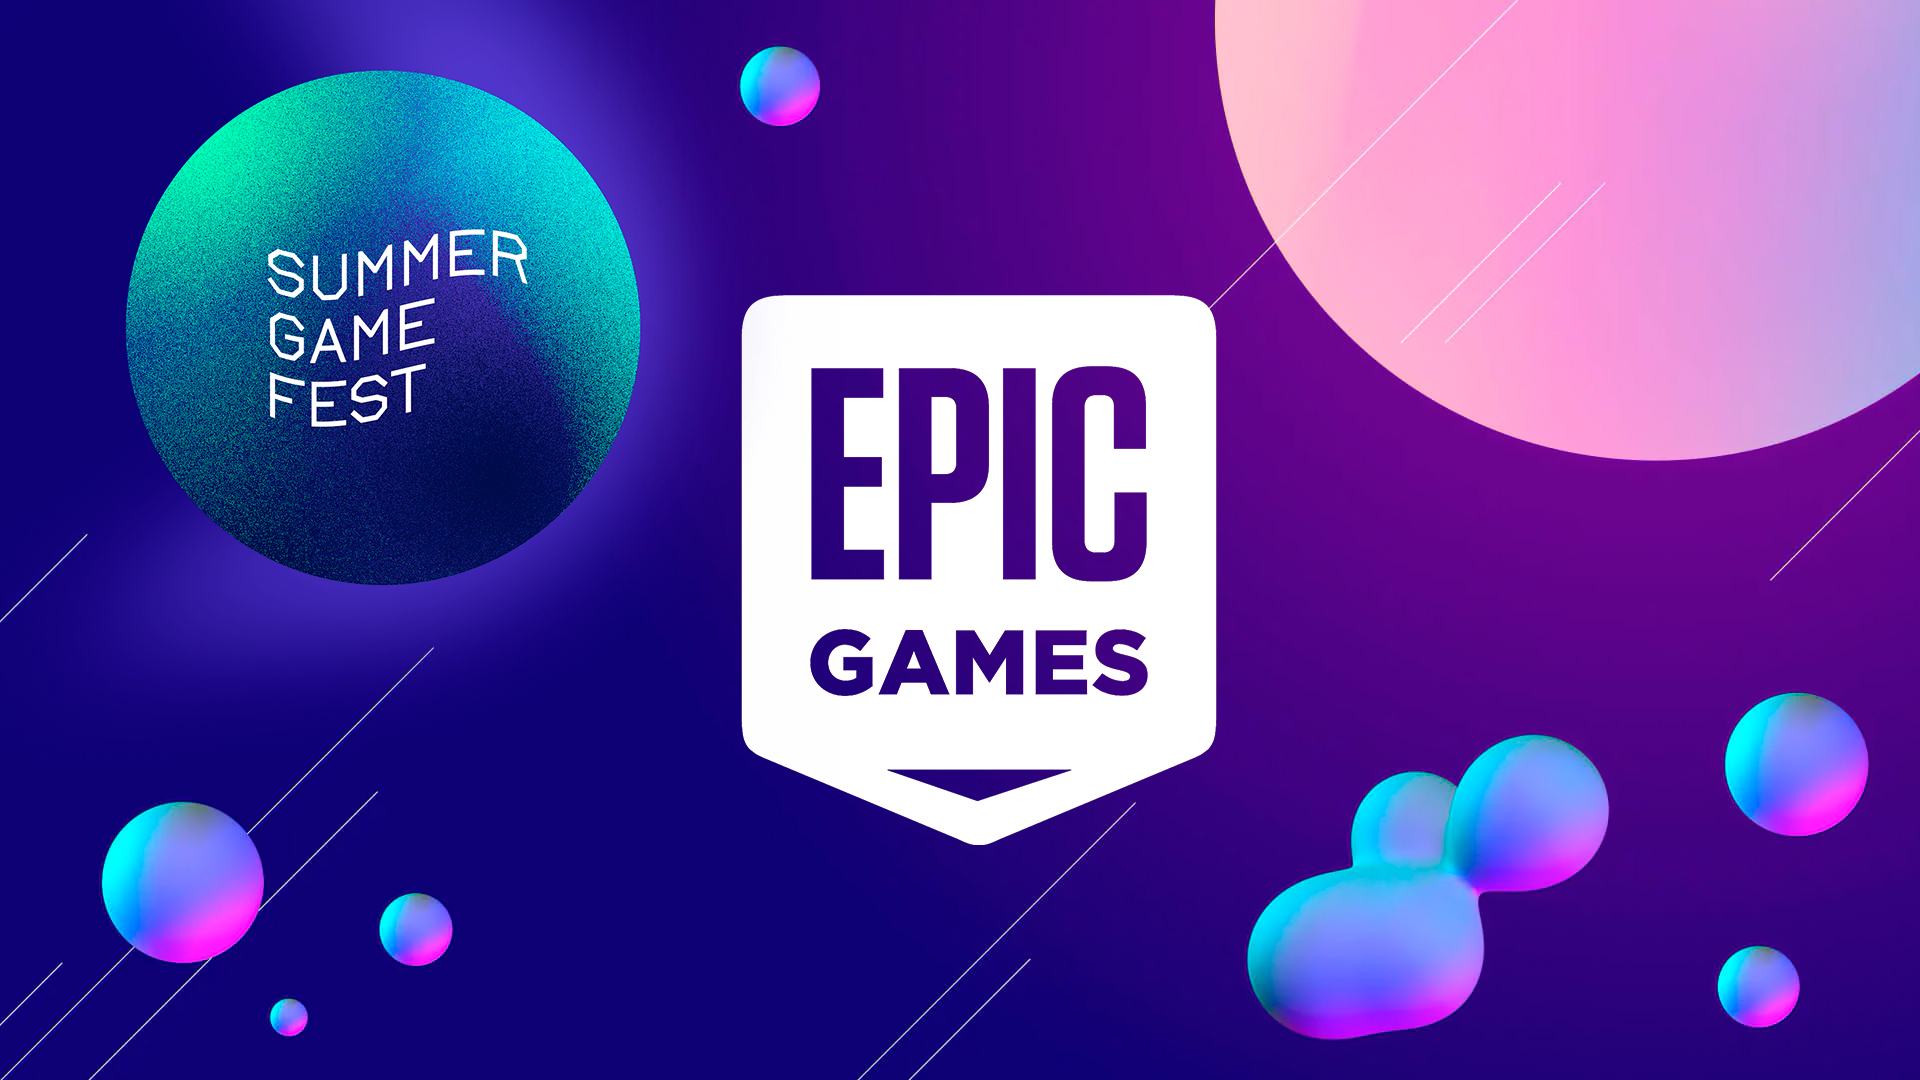 Epic Games - Summer Game Fest 2022 (10 июня) — Все Трейлеры и Анонсы (фото)